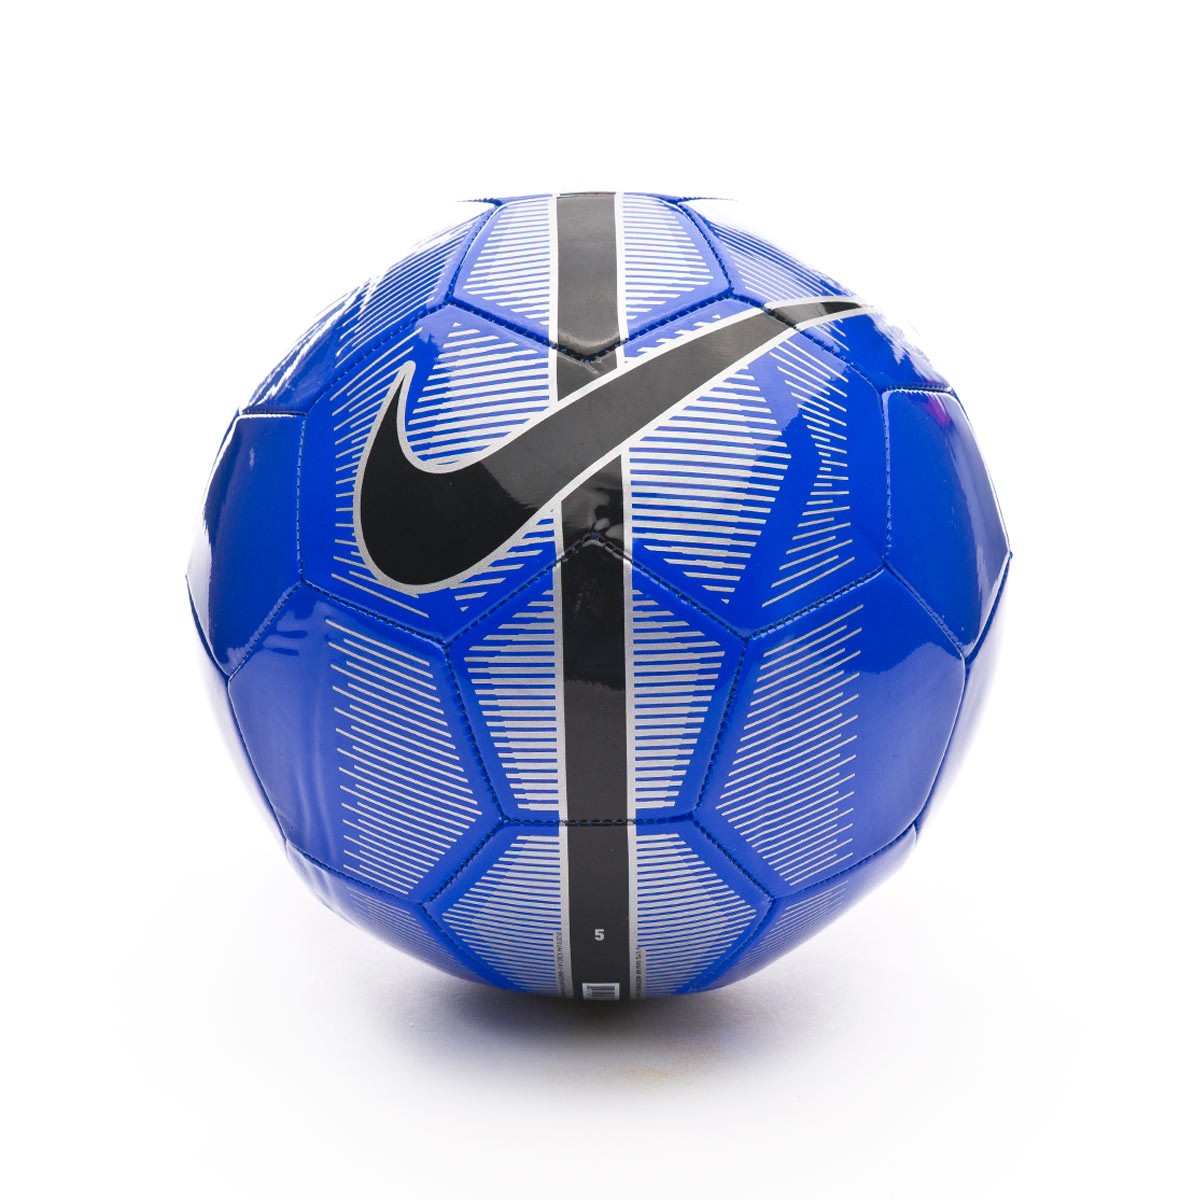 mercurial fade soccer ball